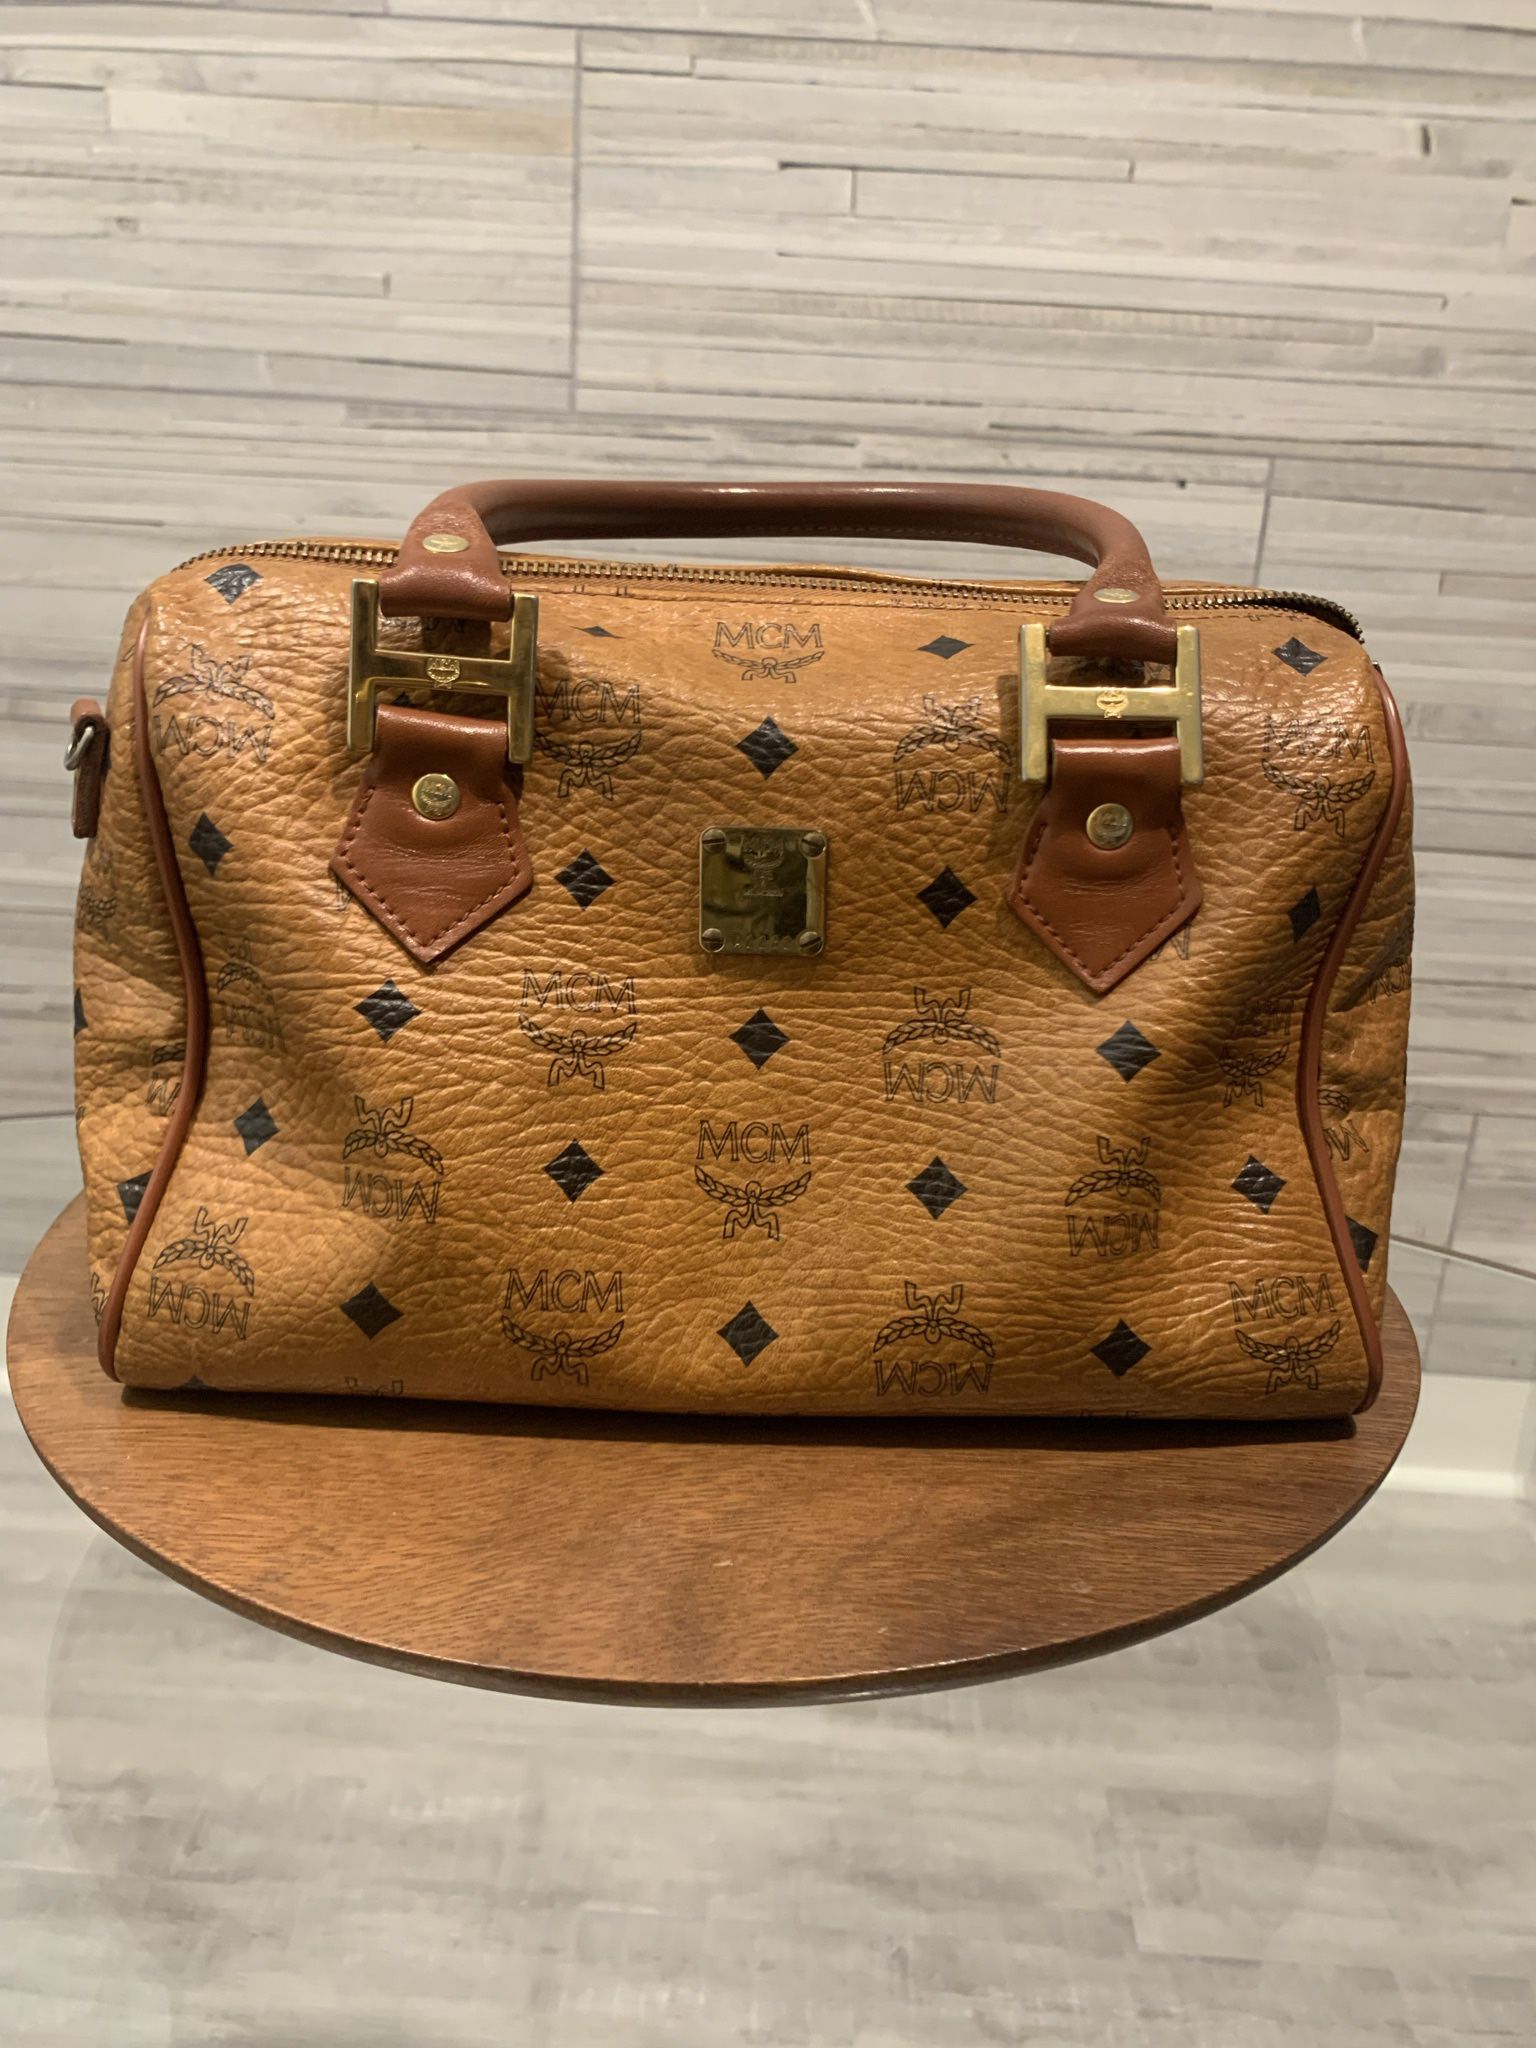 Authentic Bags & Zippy Wallet-Louis Vuitton, Gucci, Coach, MCM, Prada, Calvin Klein  (Sold Separately)